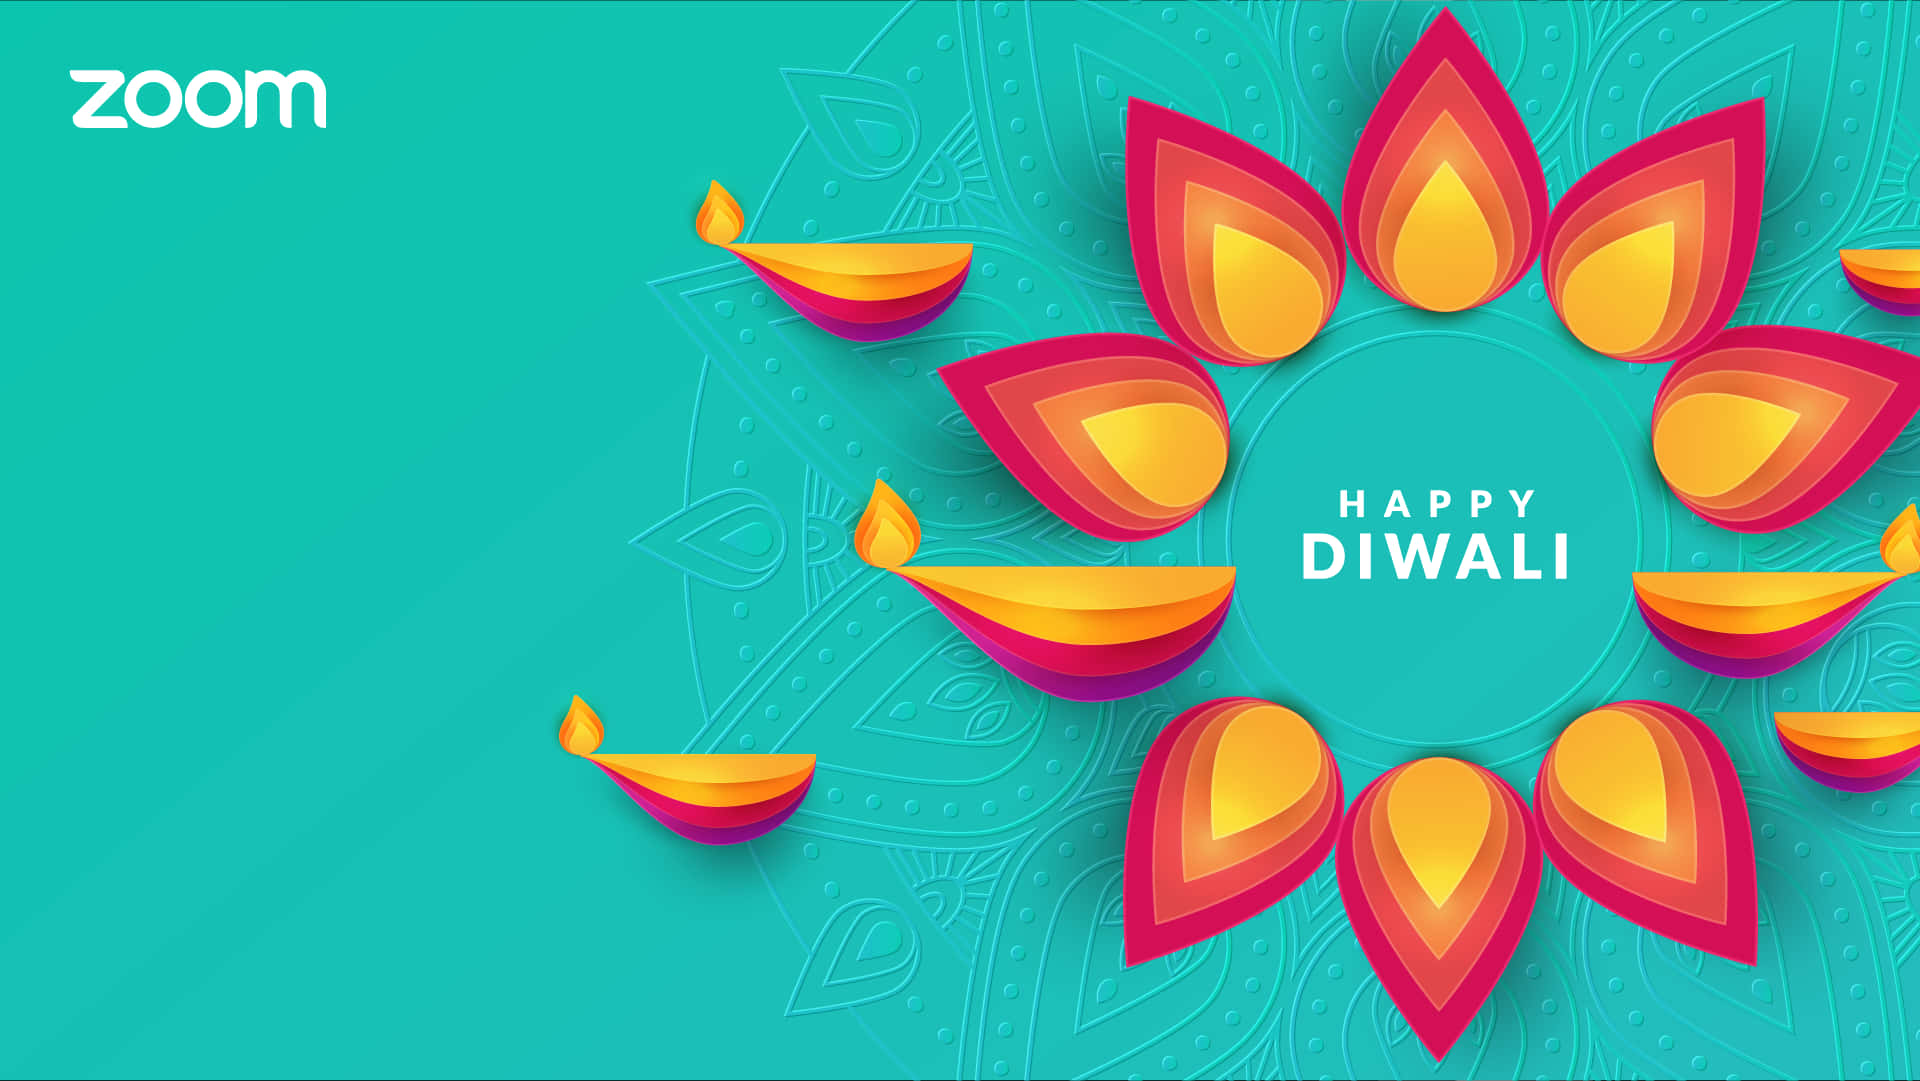 Free Diwali Wallpaper Downloads, [100+] Diwali Wallpapers for FREE |  